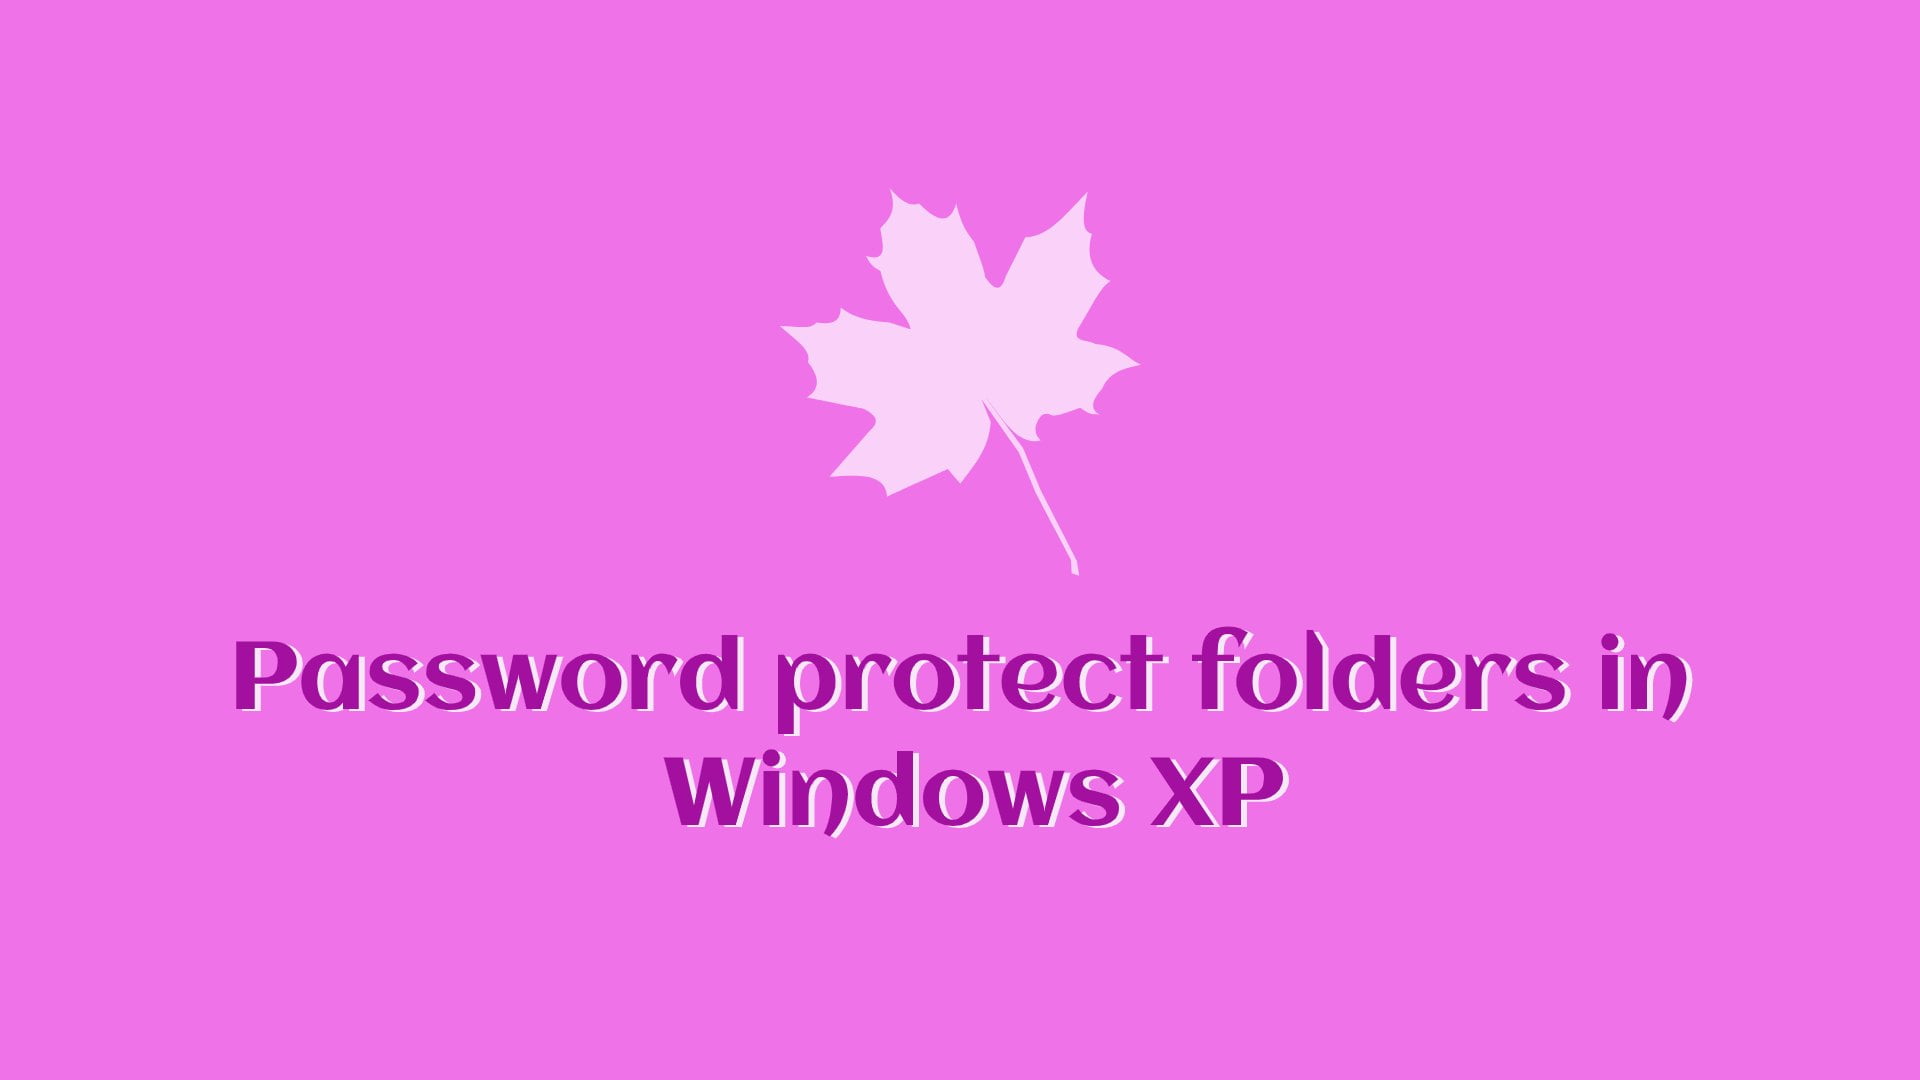 Password protect folders in Windows XP